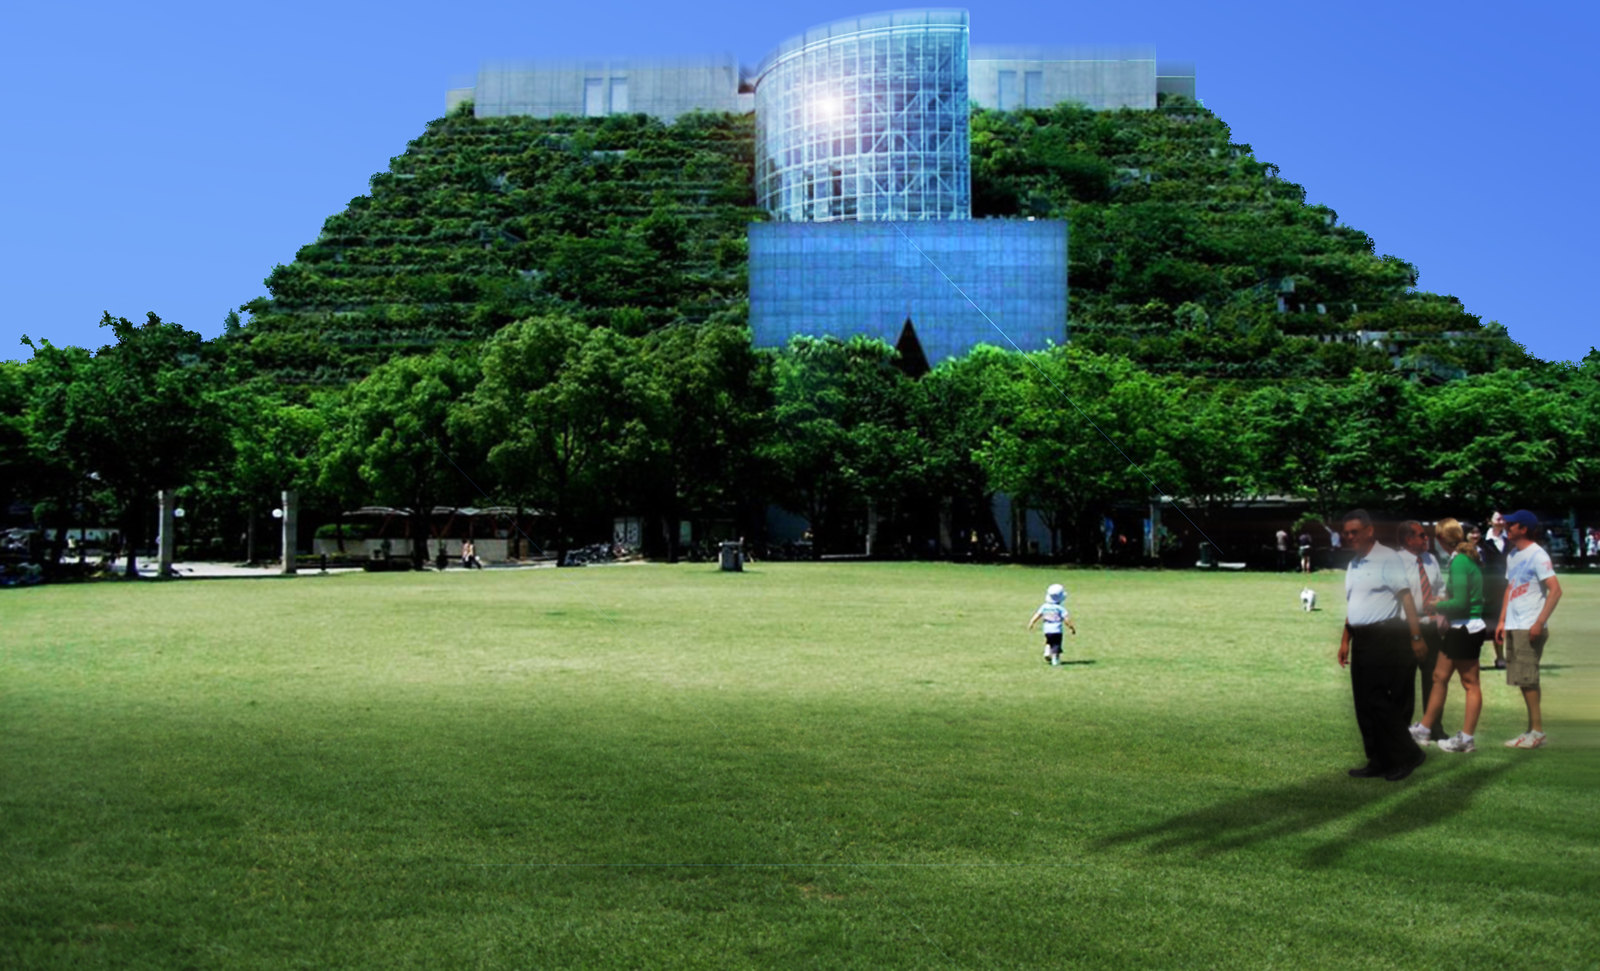 Fukuoka, ministerio con parque piramidal